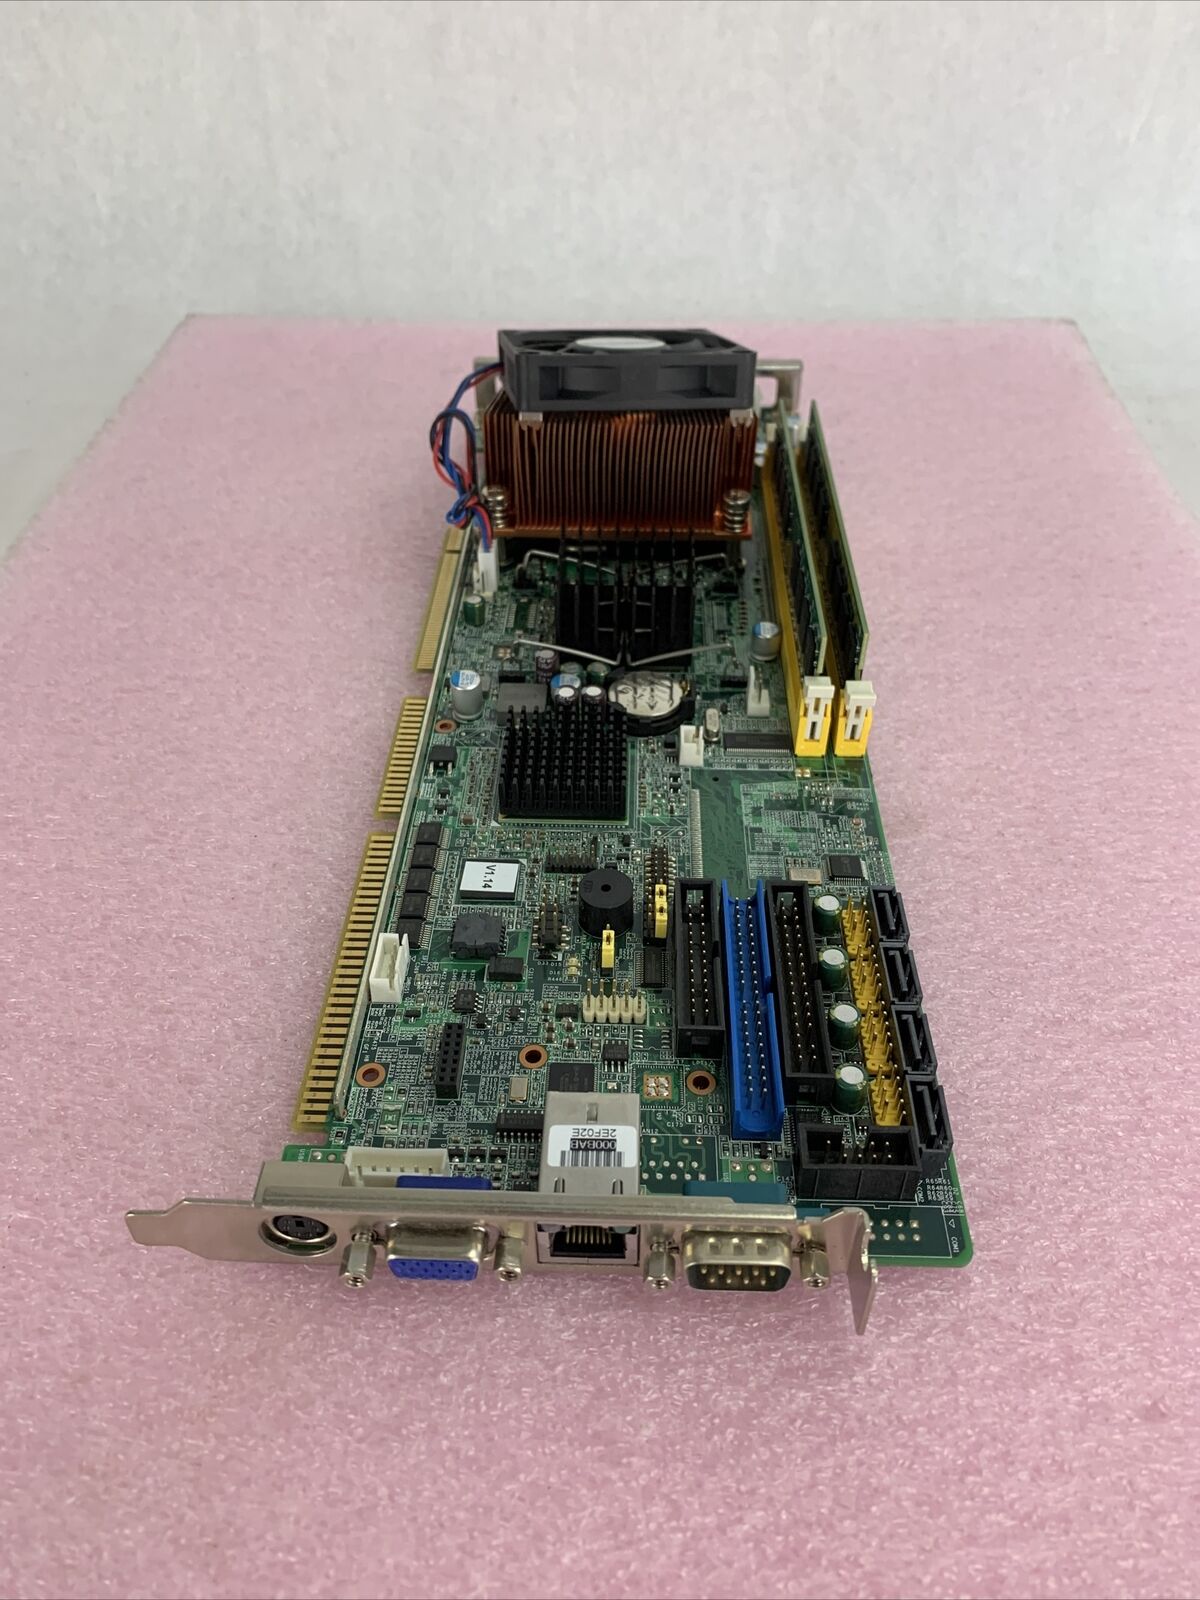 Advantech PVA 6010 Motherboard Intel Core 2 Duo 2.8GHz 3.25GB RAM